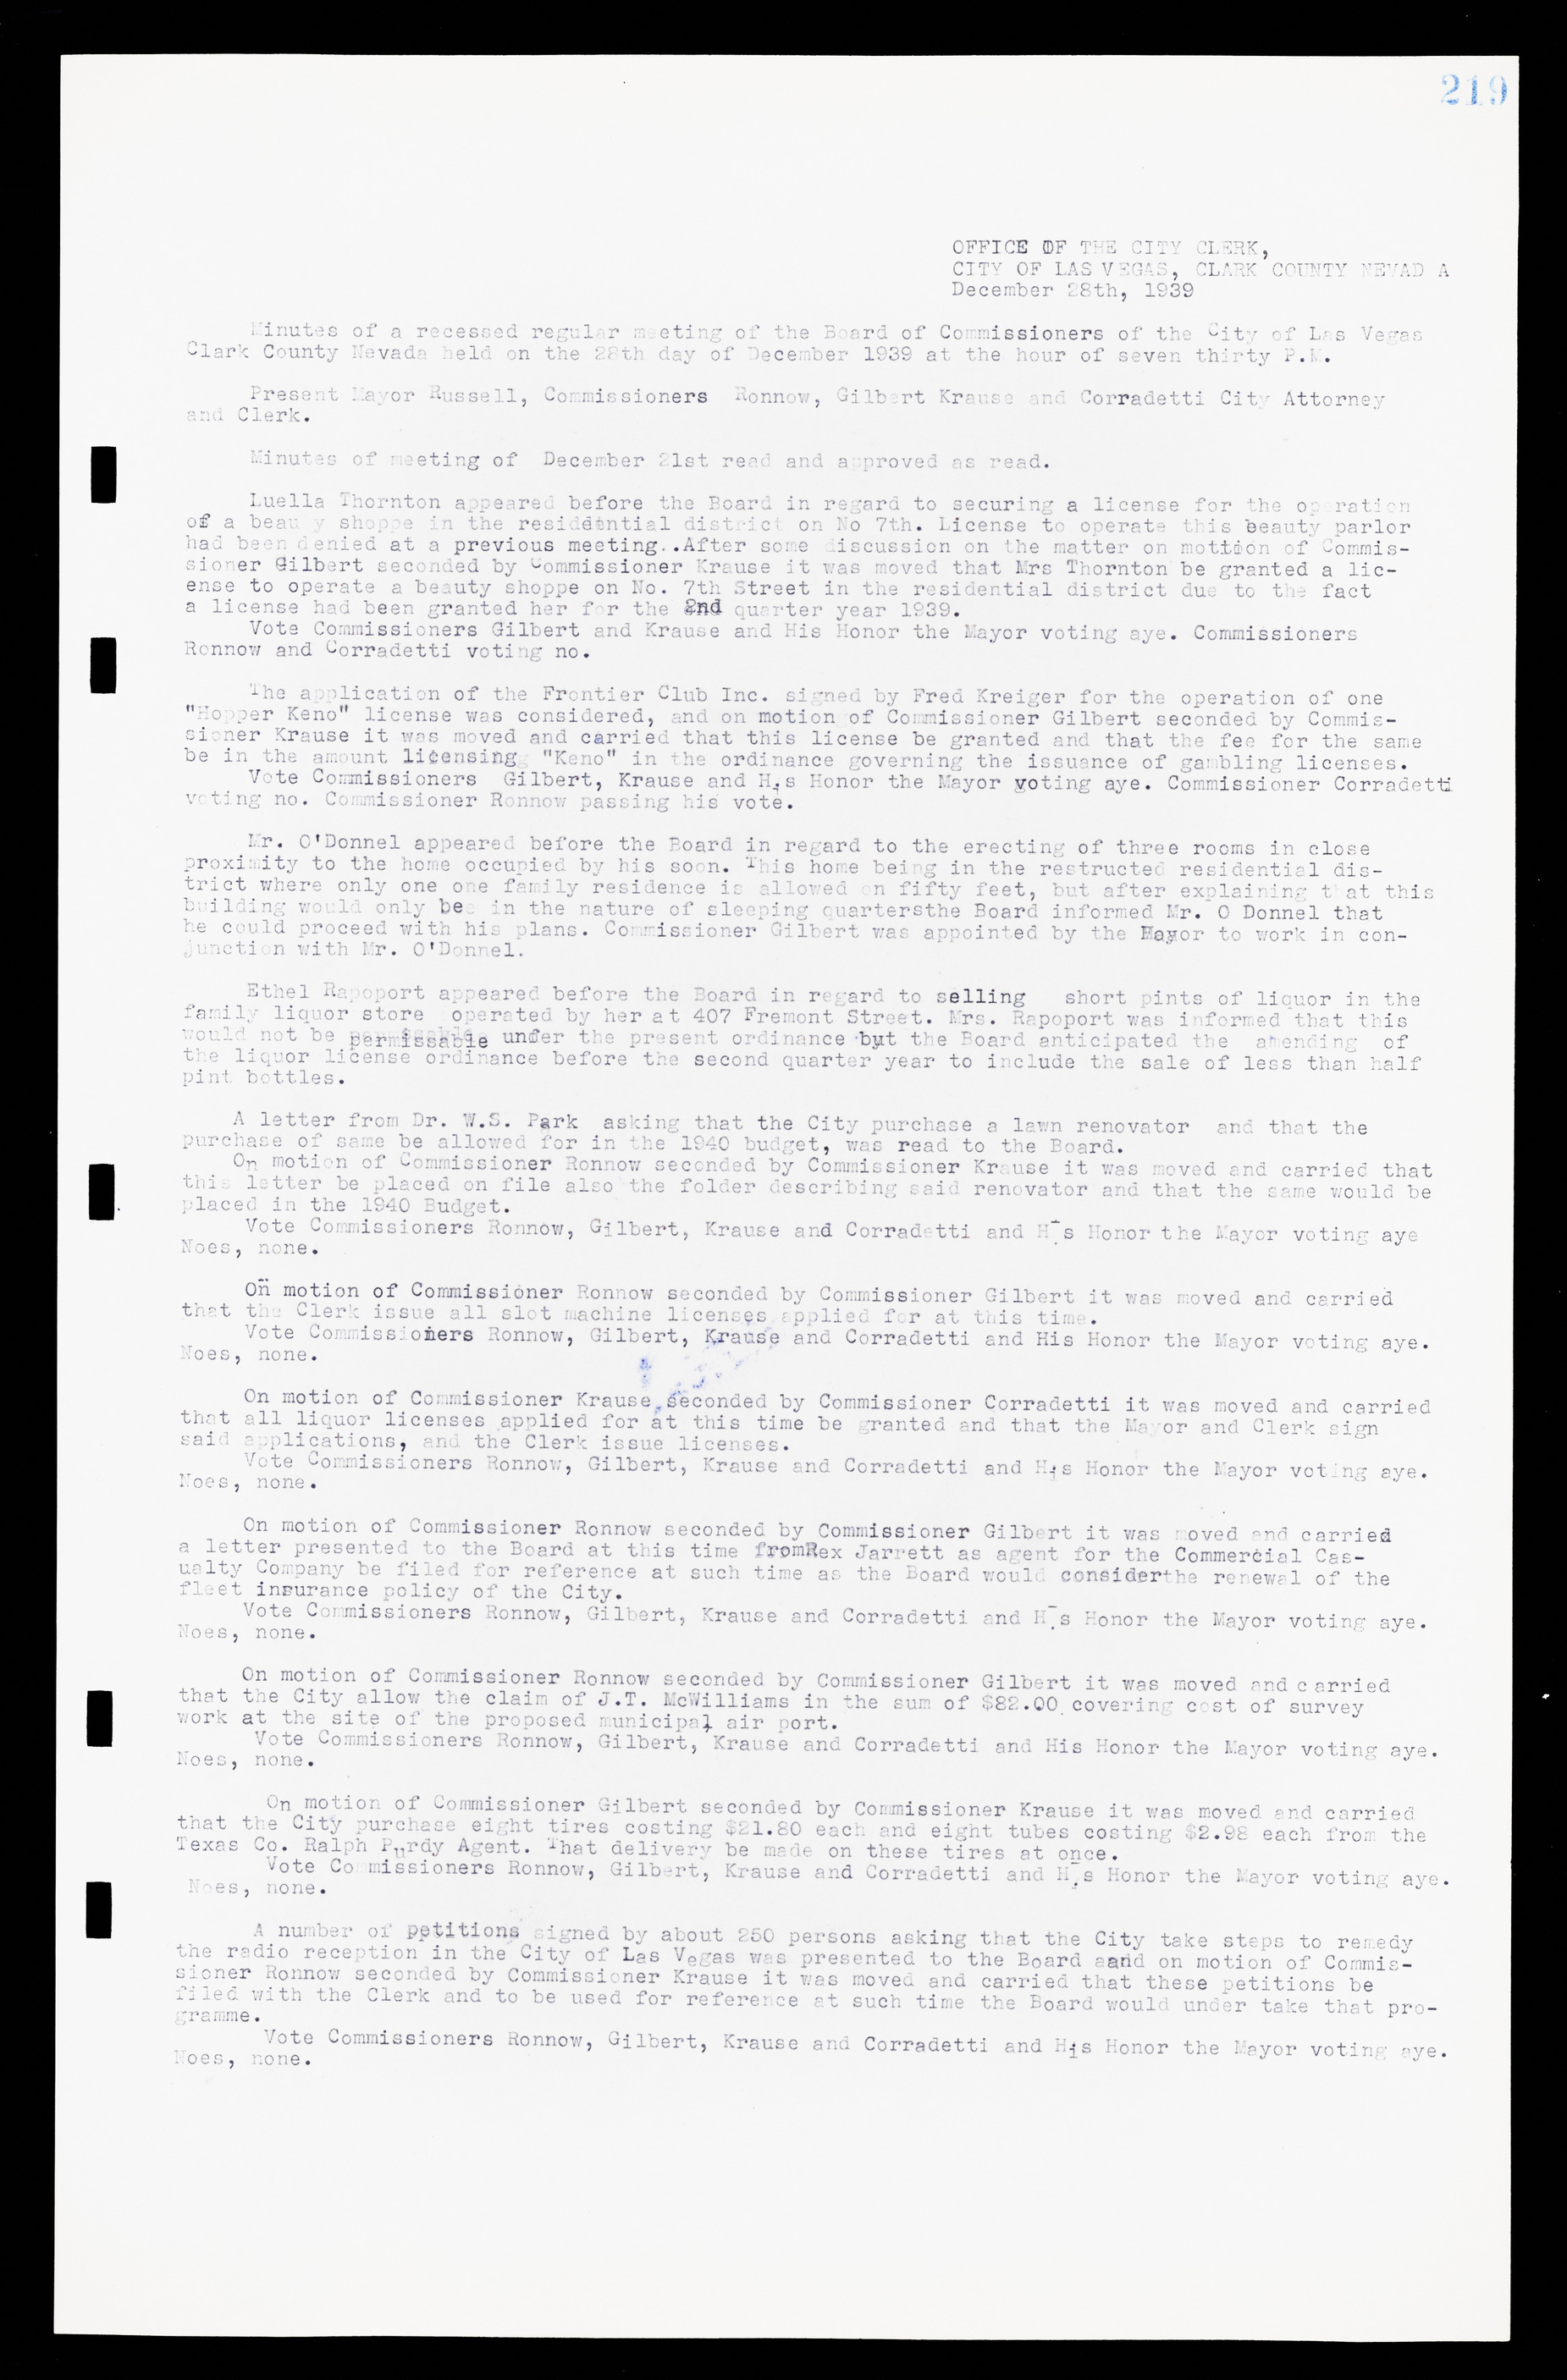 Las Vegas City Commission Minutes, February 17, 1937 to August 4, 1942, lvc000004-237